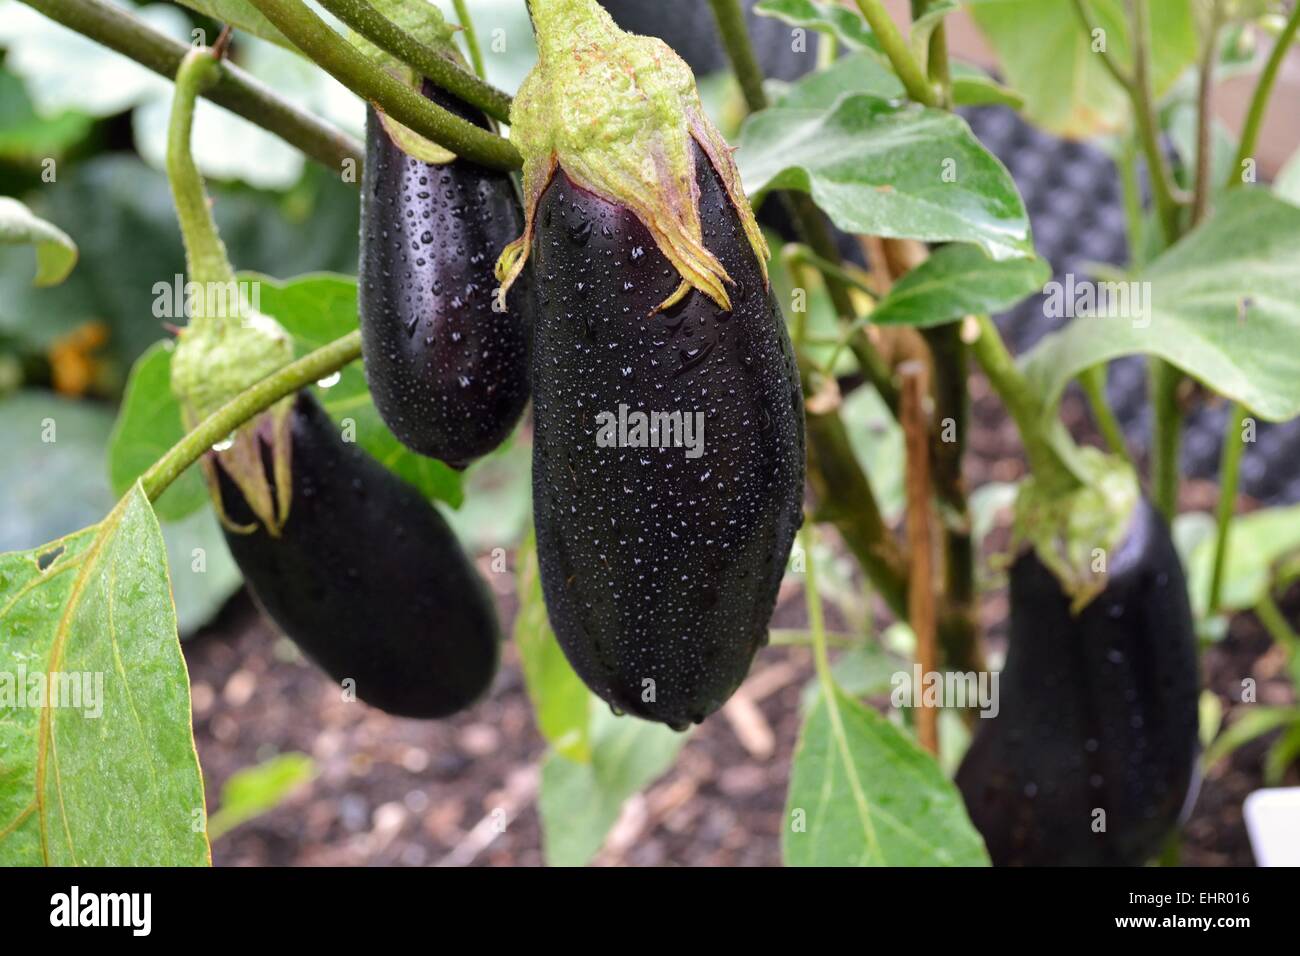 Eggplant in the garden Stock Photo